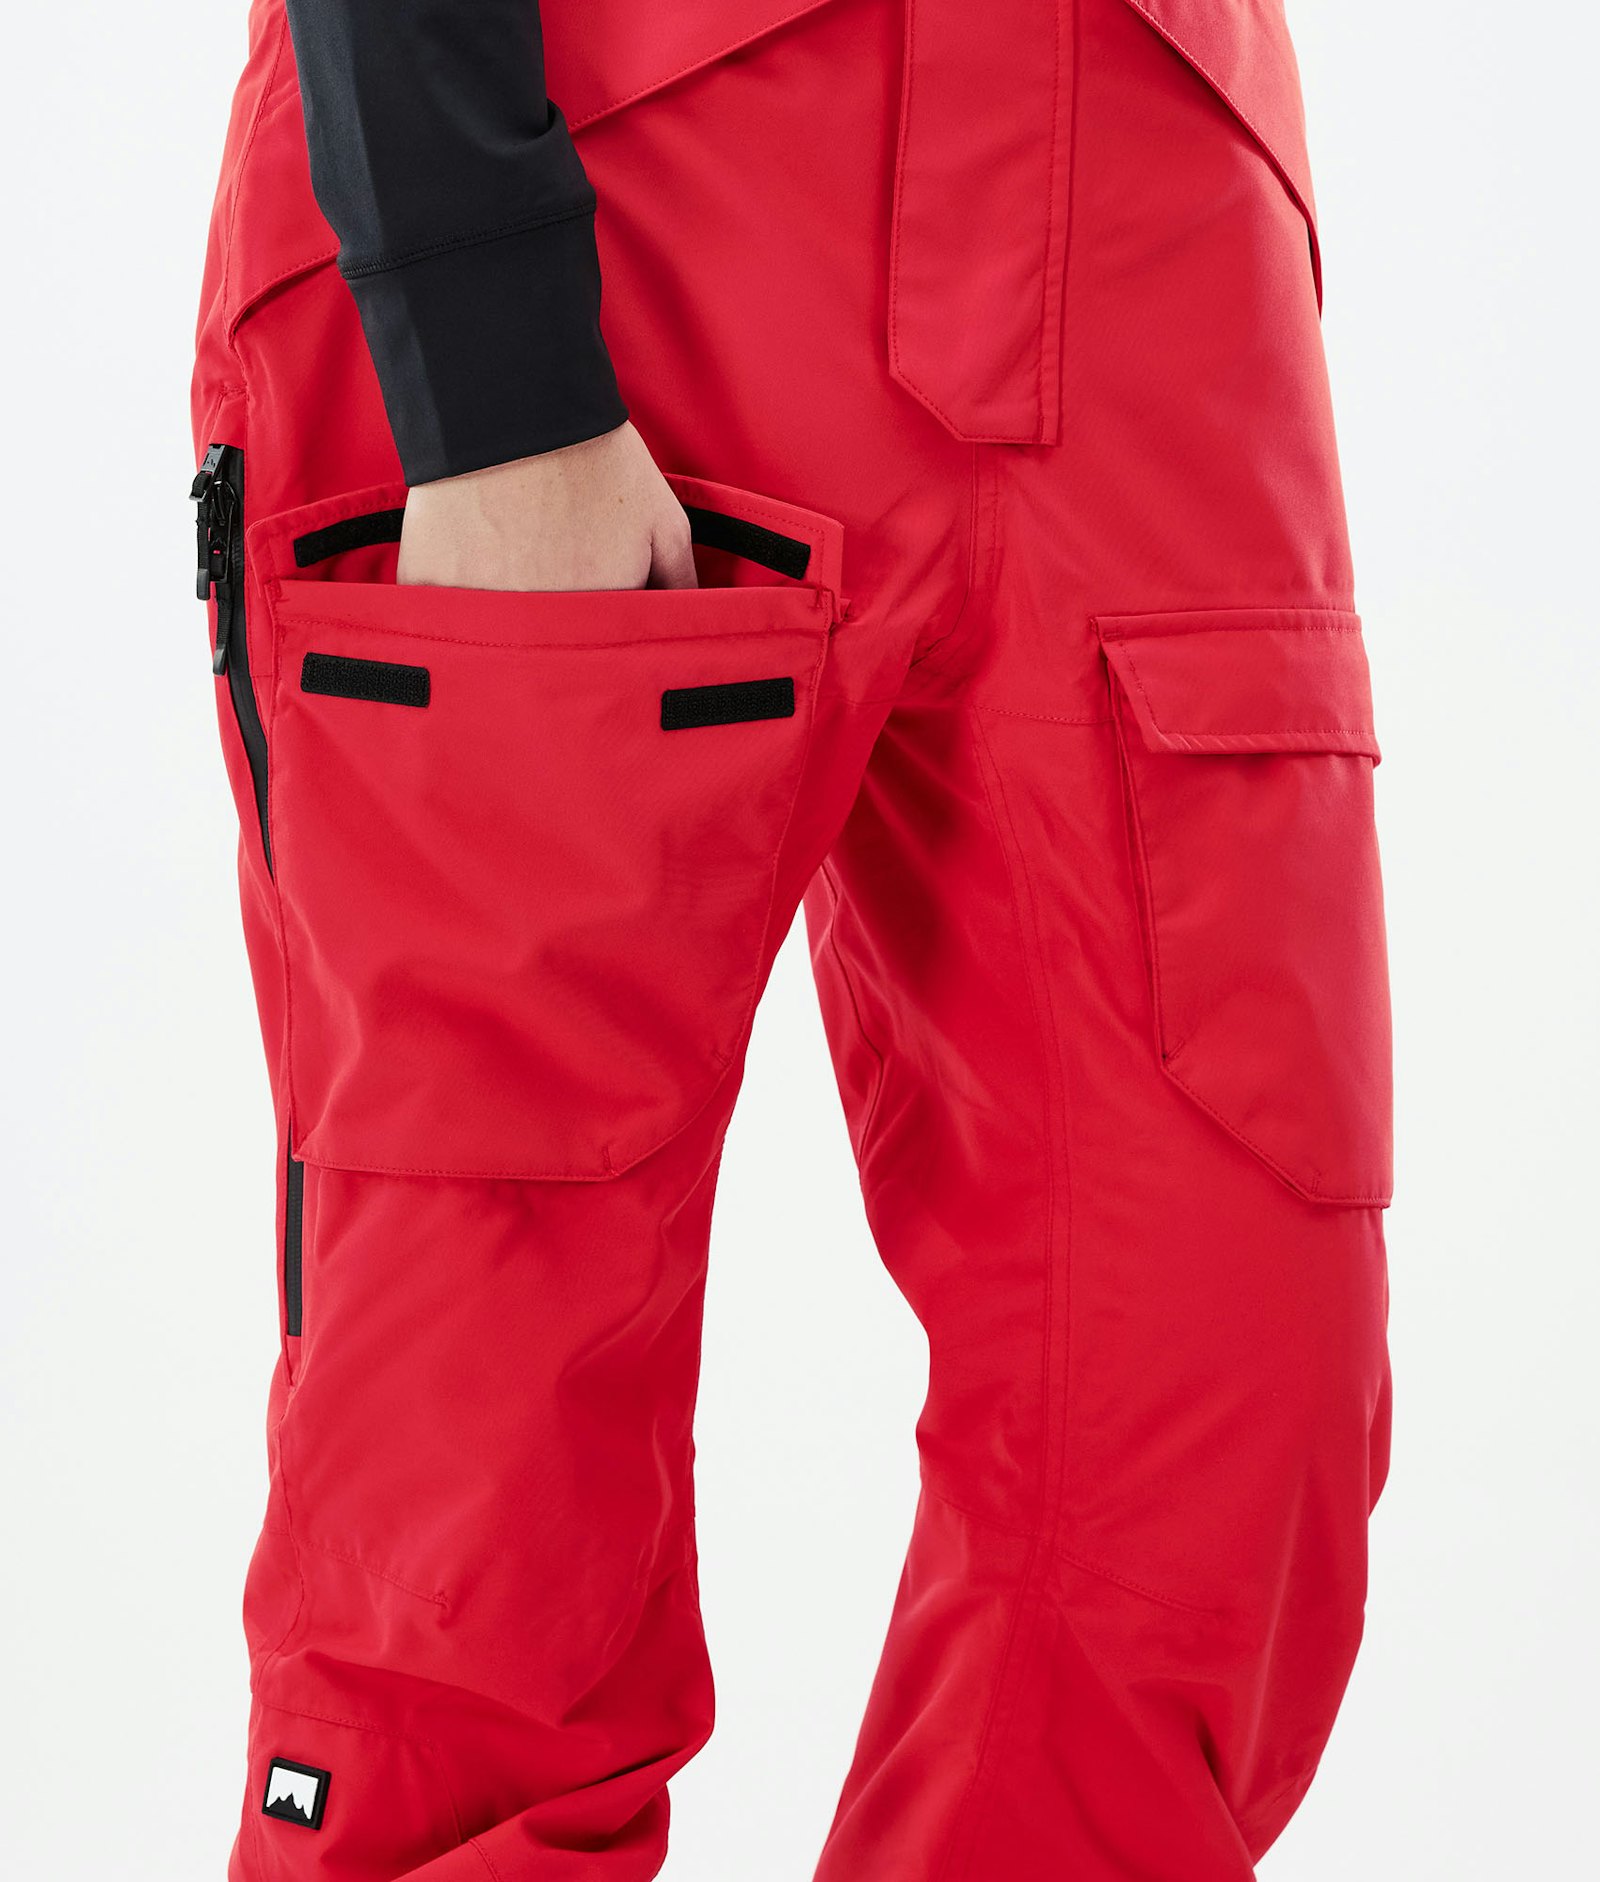 Fawk W 2021 Pantalon de Ski Femme Red